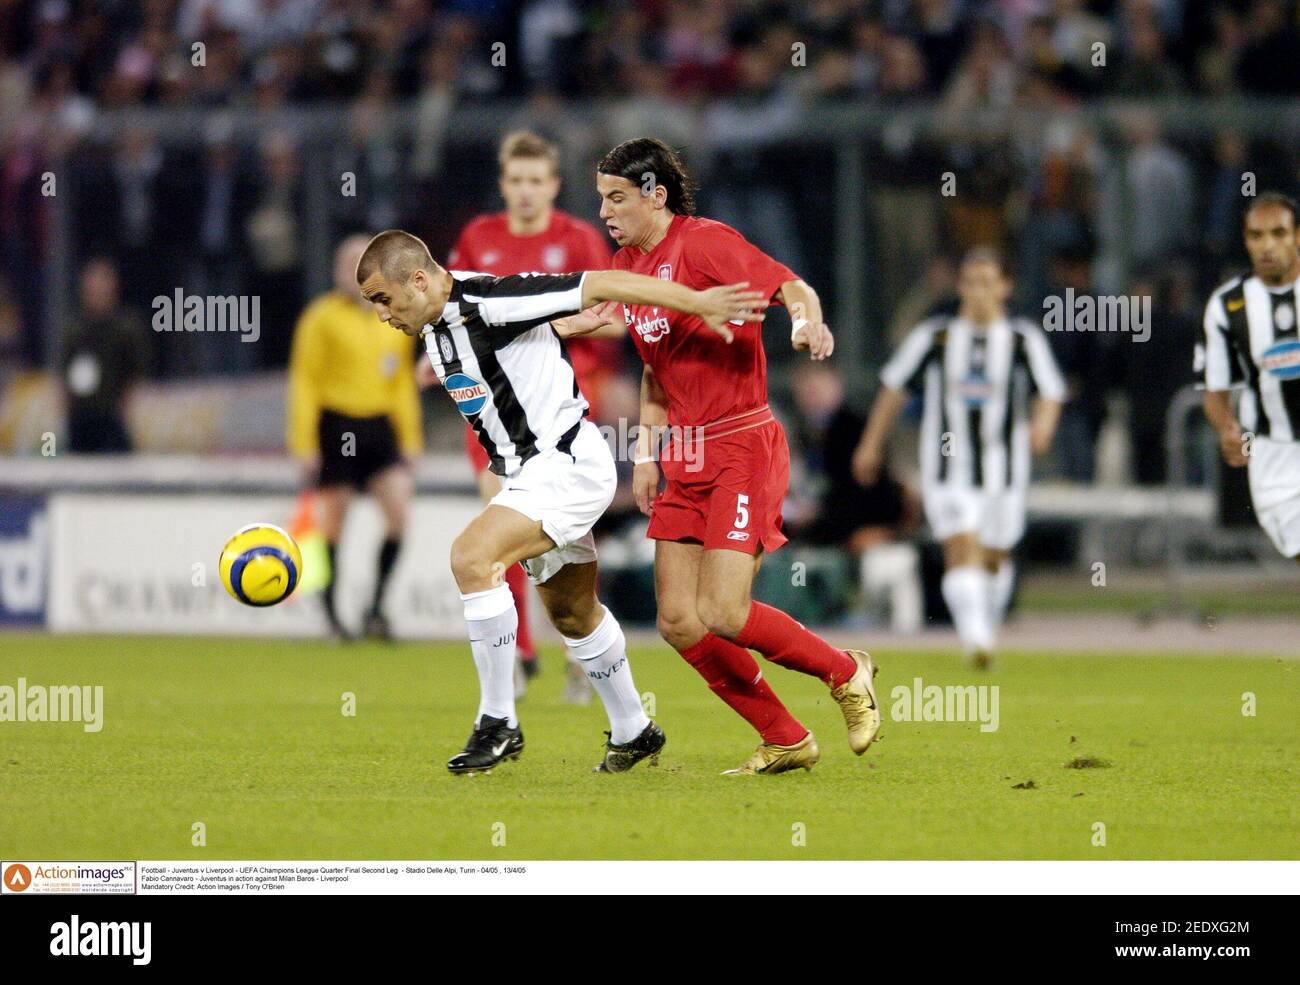 Football - Juventus v Liverpool - UEFA Champions League Quarter Final  Second Leg - Stadio Delle Alpi, Turin - 04/